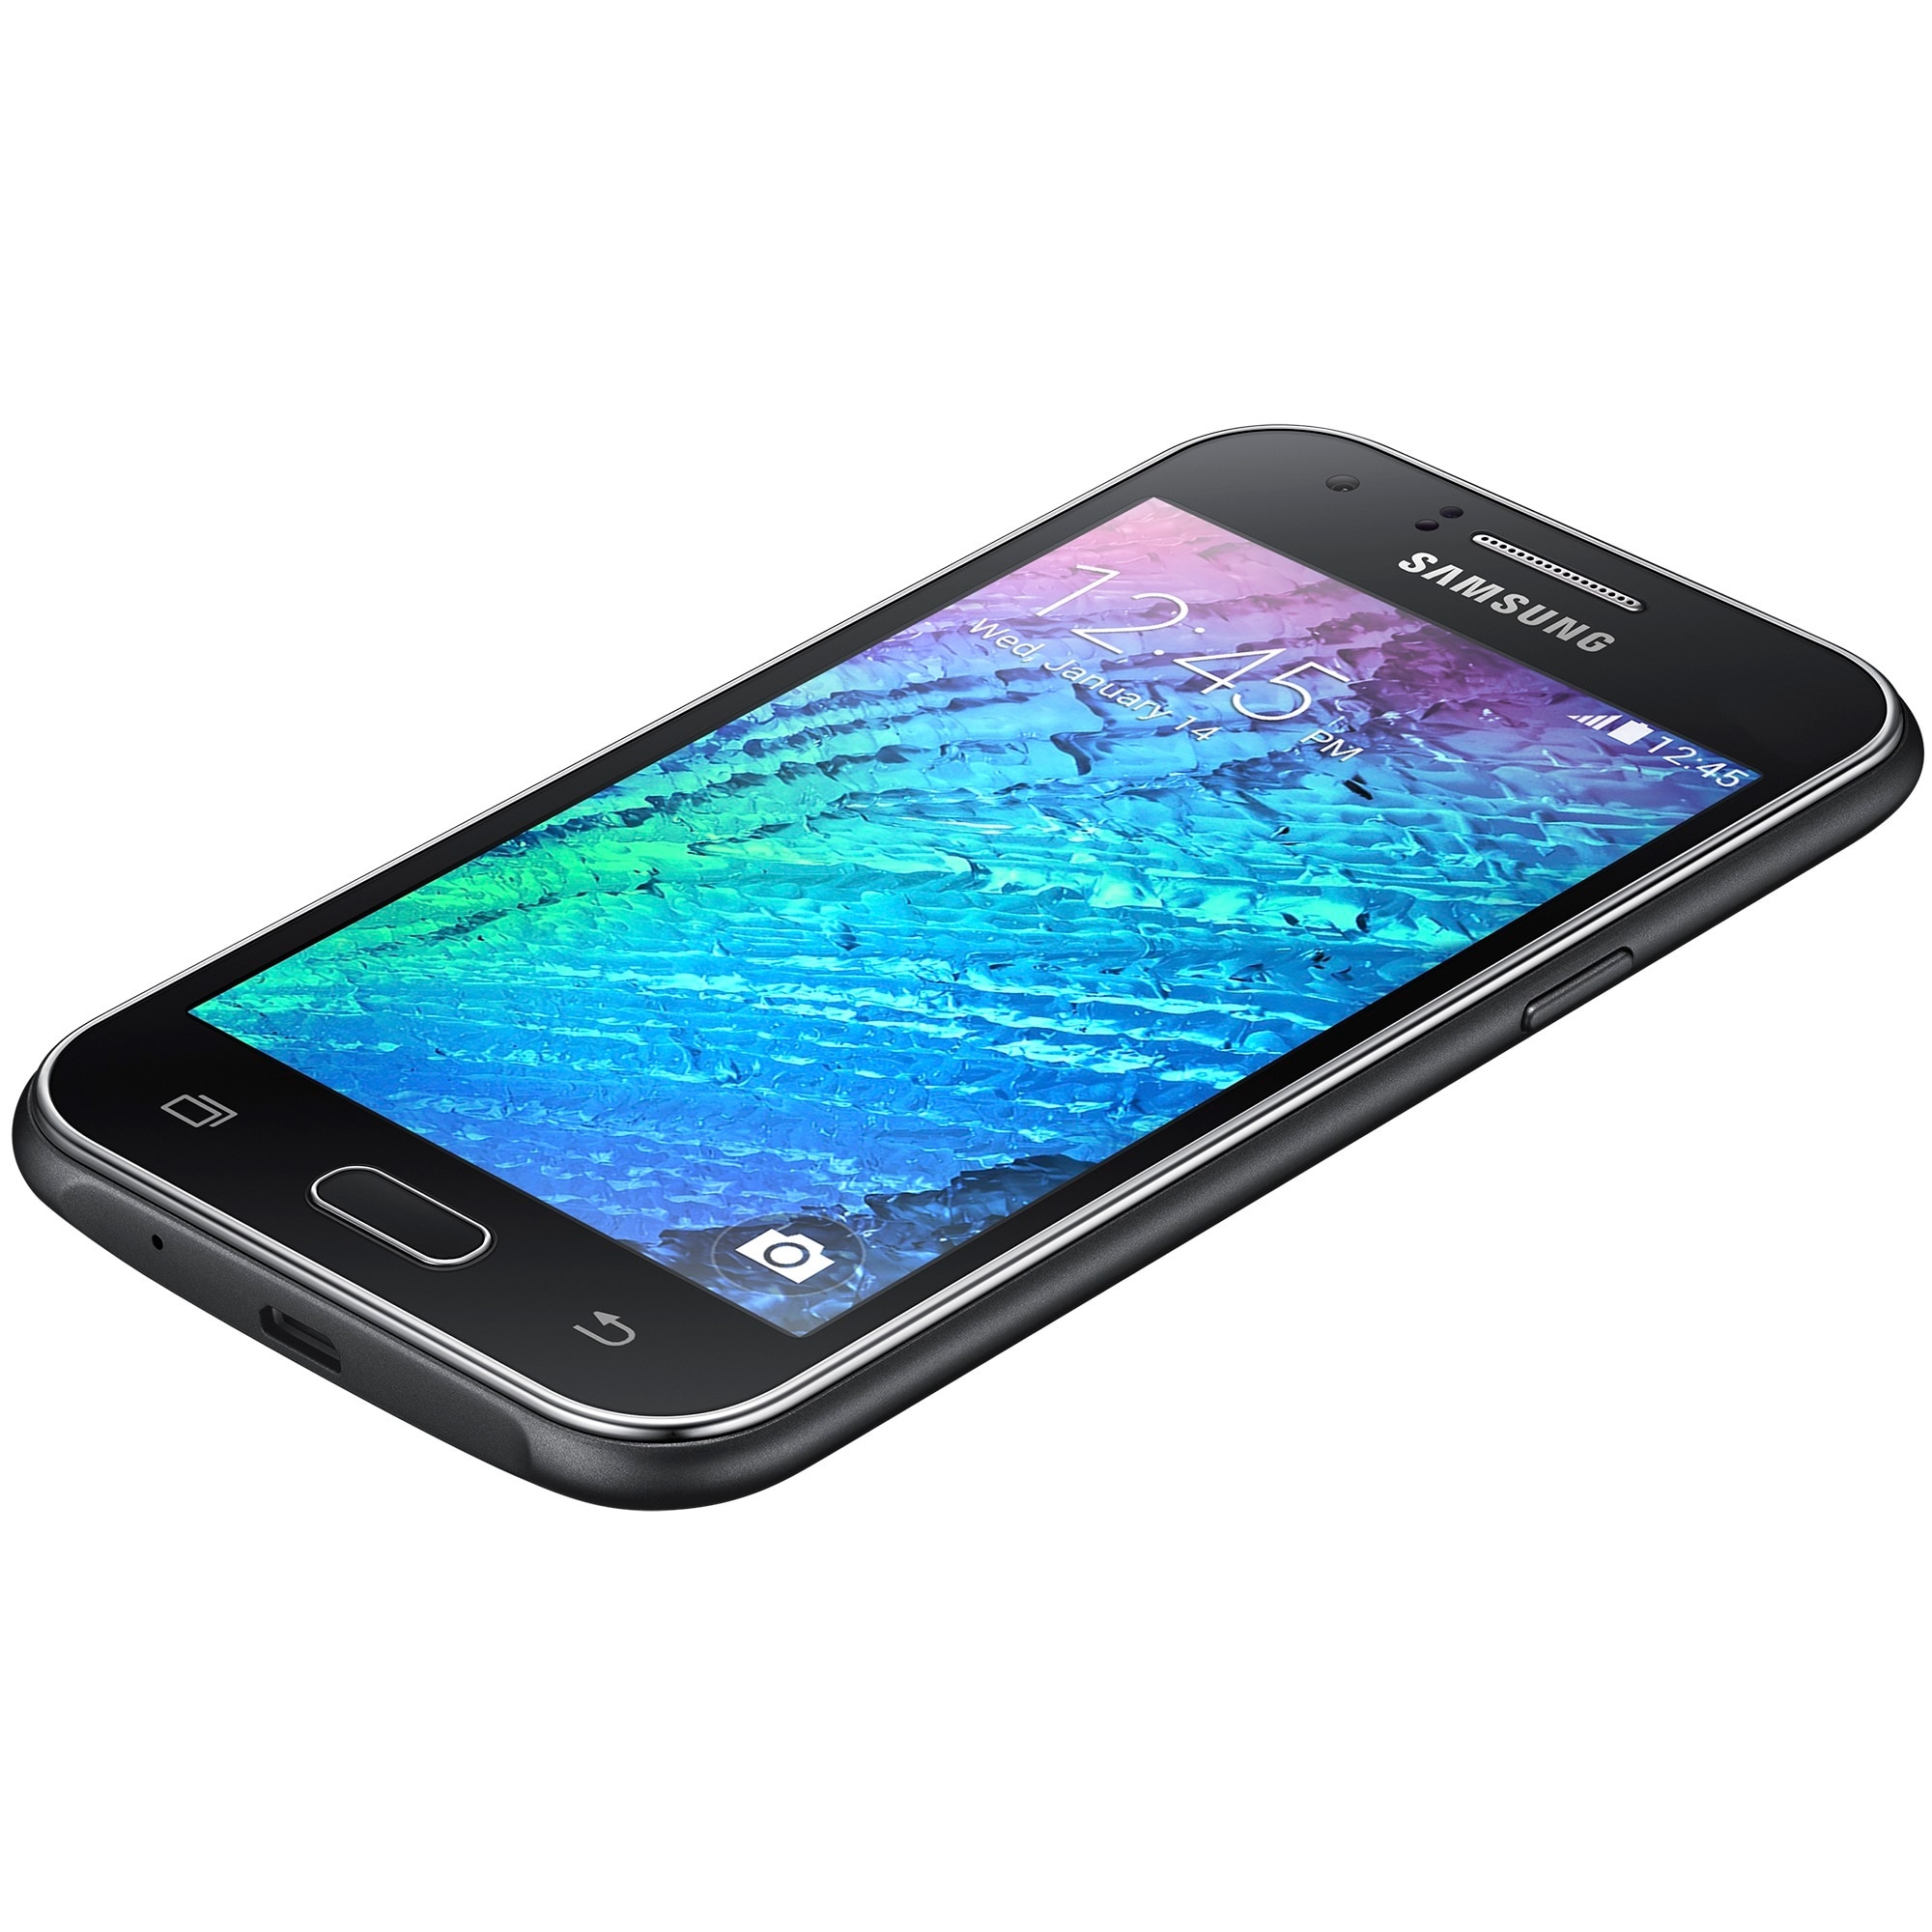 Купить телефон j1. Samsung Galaxy j1 SM-j100h. Samsung Galaxy j1 Duos. Samsung Galaxy j1 SM-j110h. Самсунг галакси j1 2015.